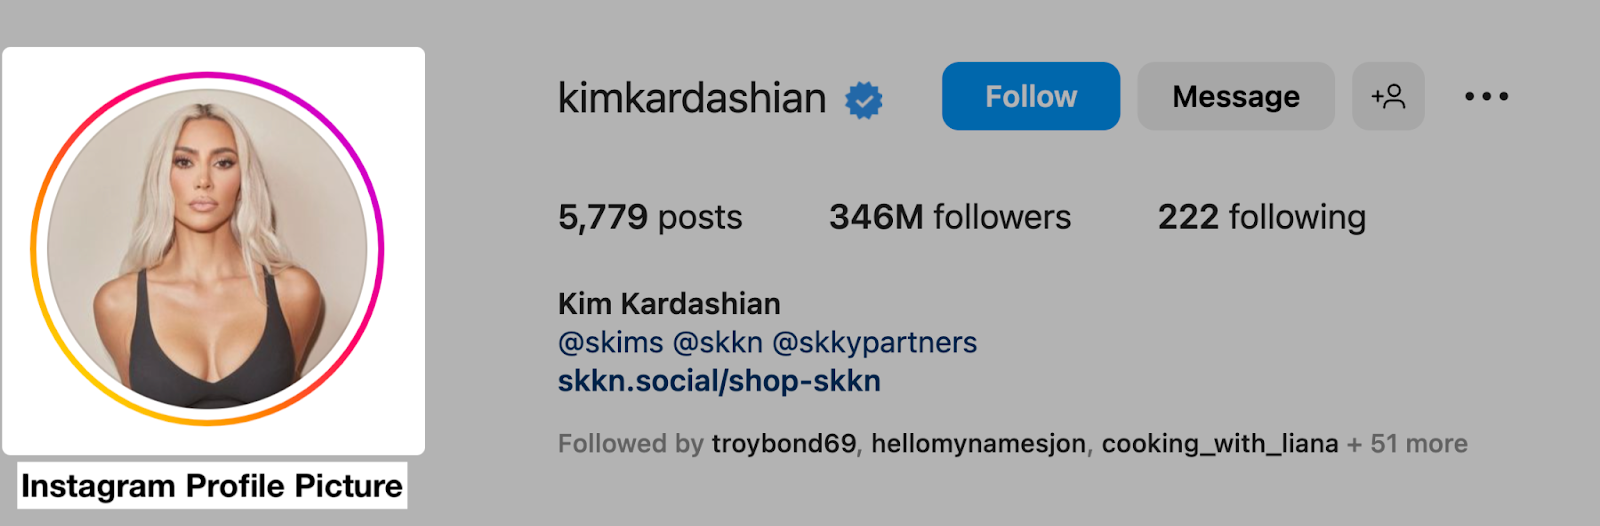 kimkardashian instagram profile picture